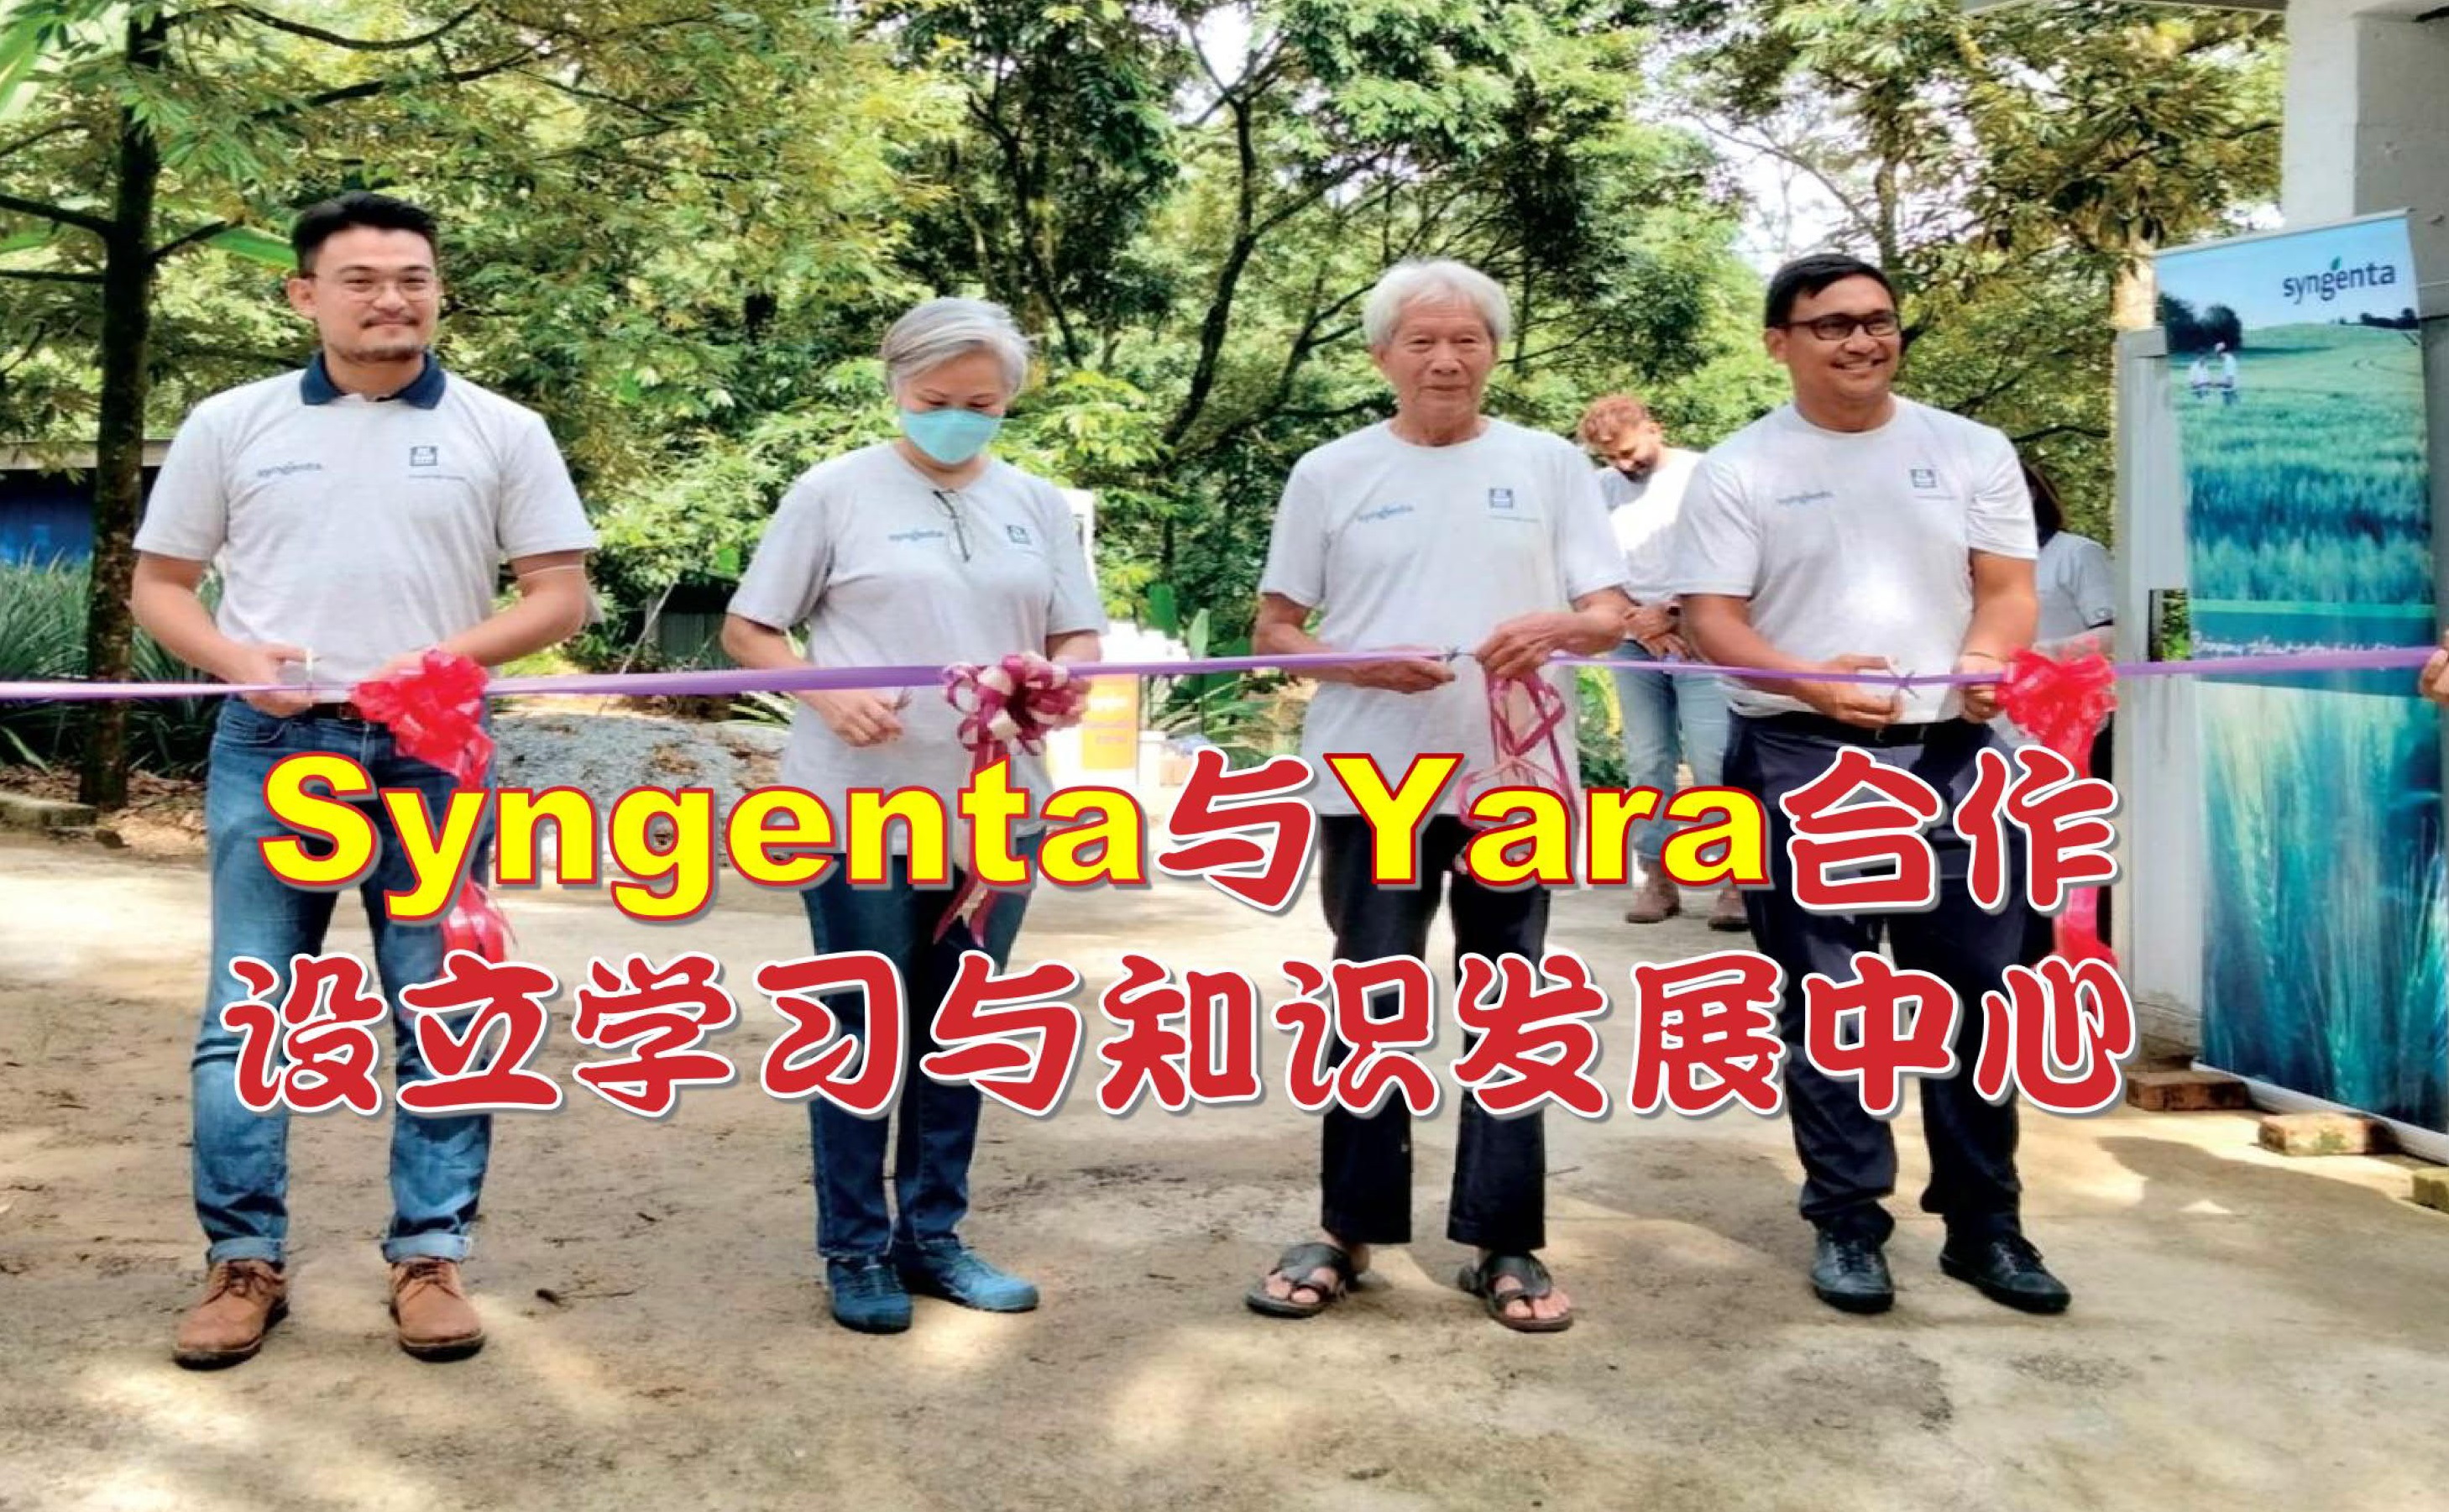 Syngenta与Yara合作 设立学习与知识发展中心 - 农牧世界